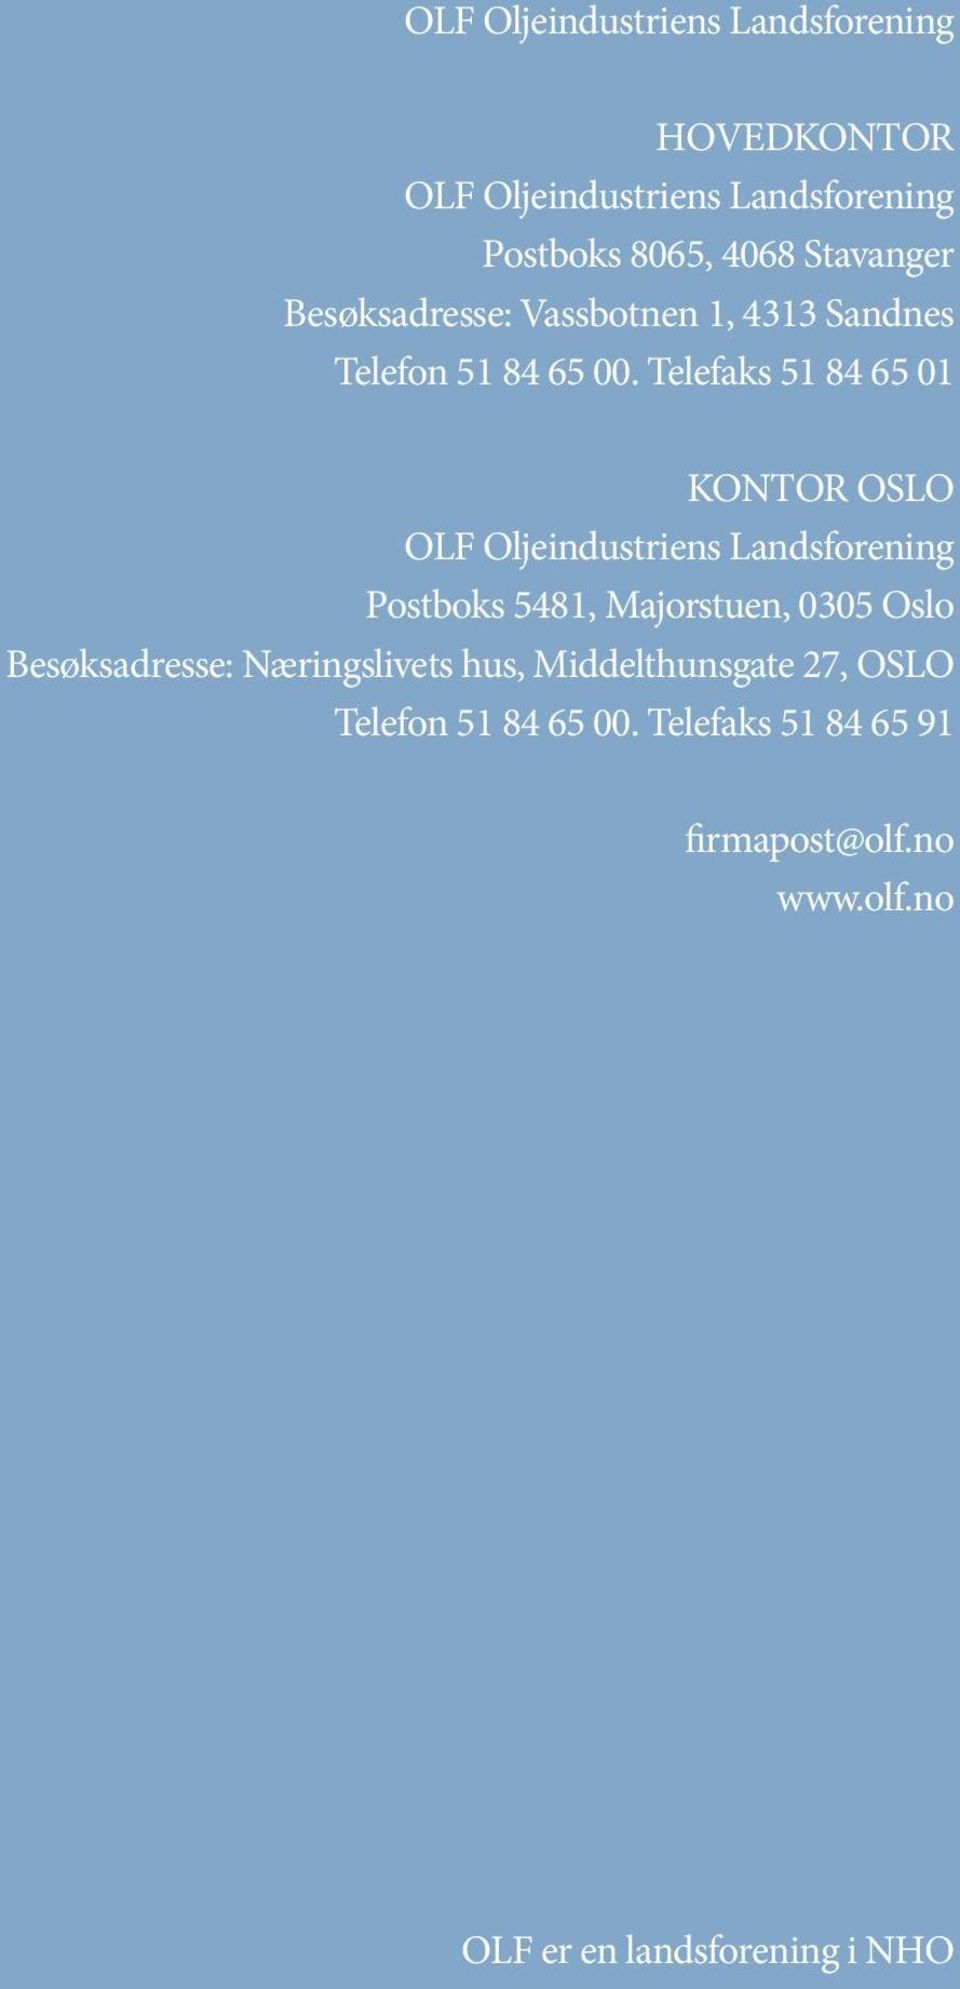 Telefaks 51 84 65 01 KONTOR OSLO OLF Oljeindustriens Landsforening Postboks 5481, Majorstuen, 0305 Oslo